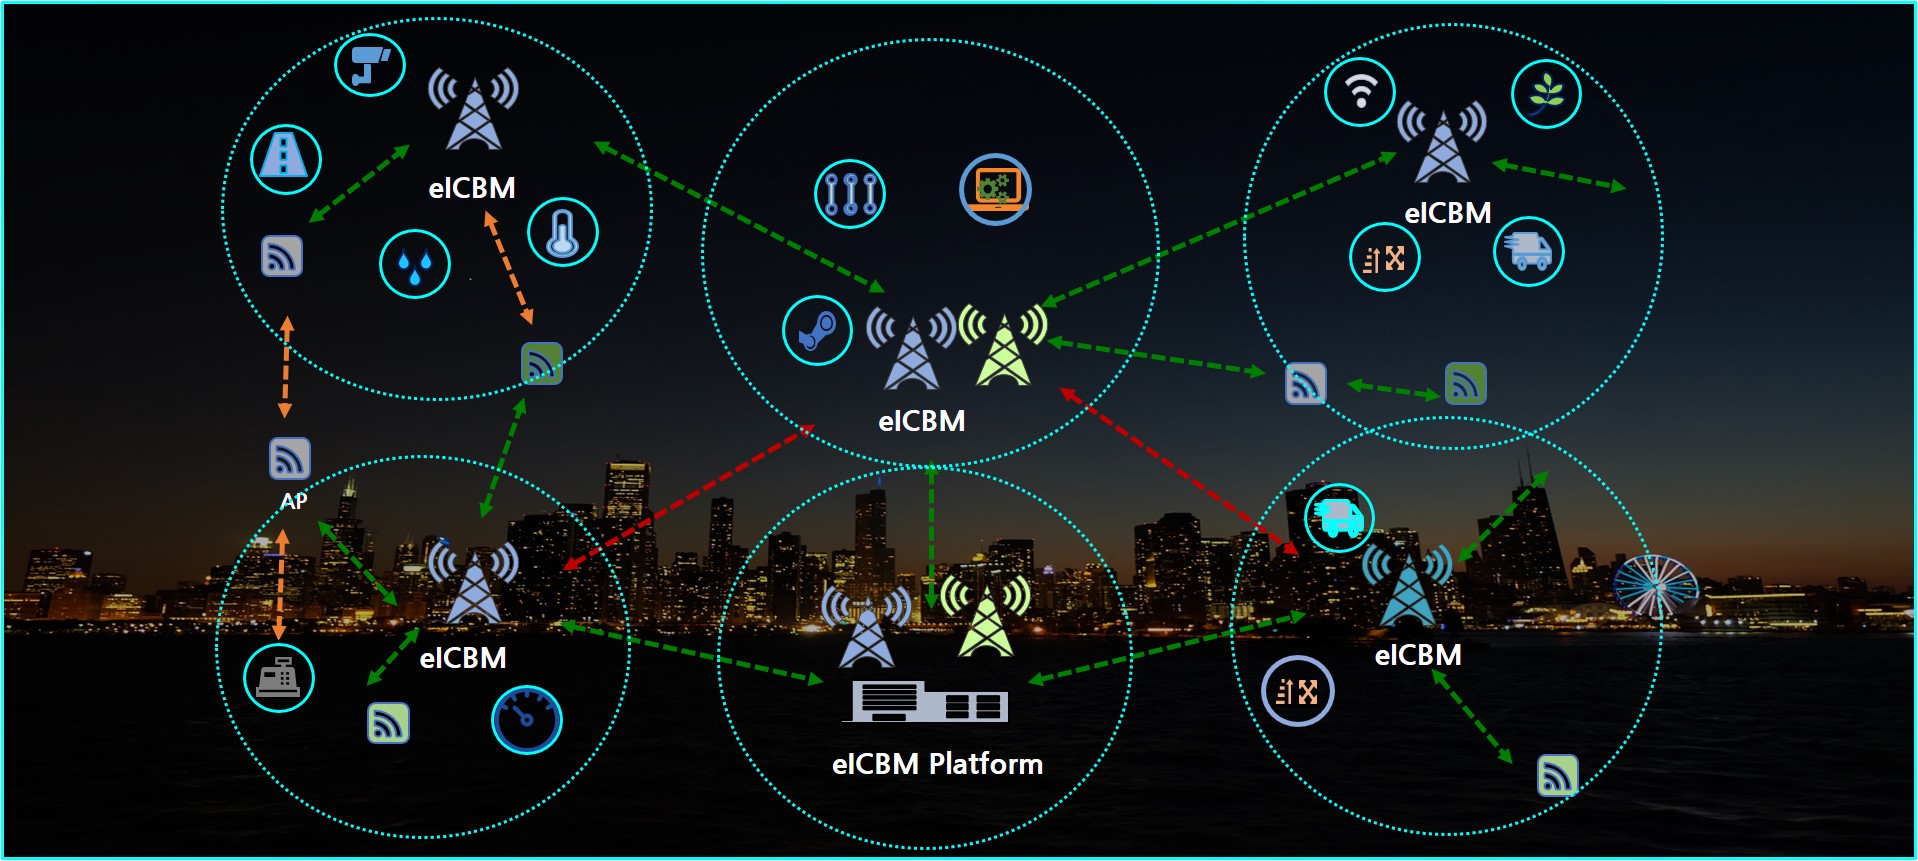 eICBM Platform